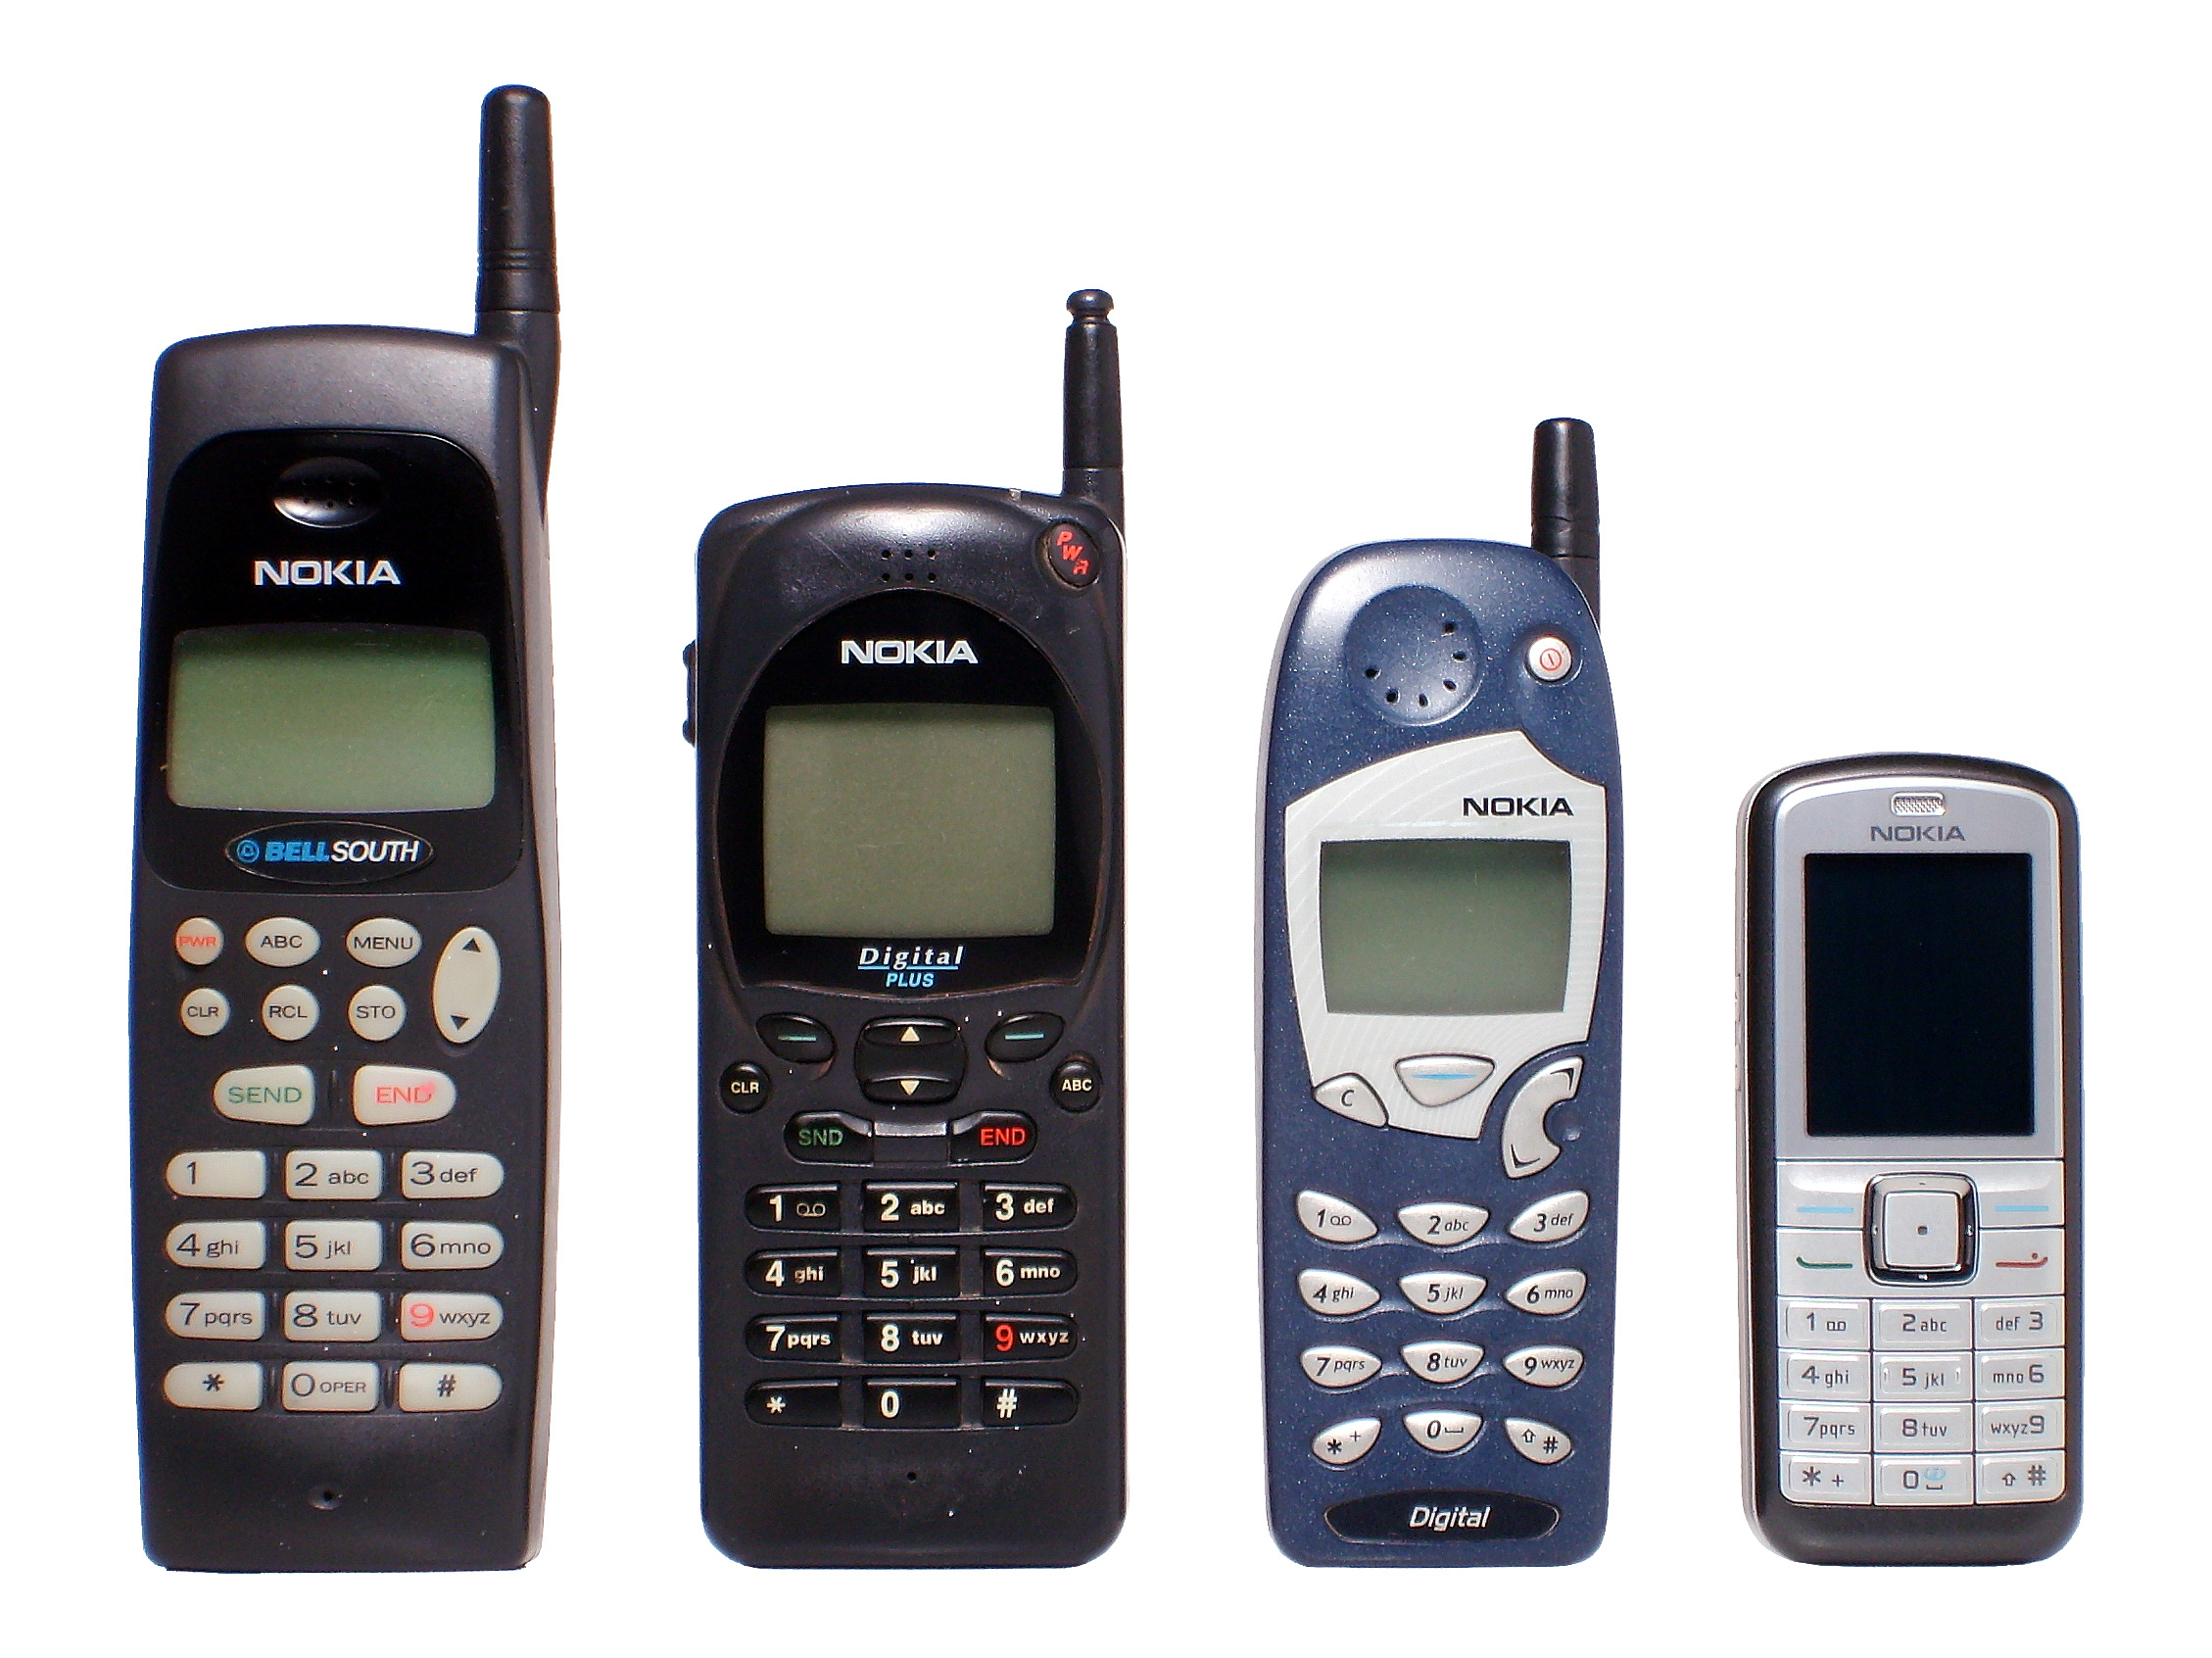 File:Nokia evolucion tamaño.jpg - Wikimedia Commons